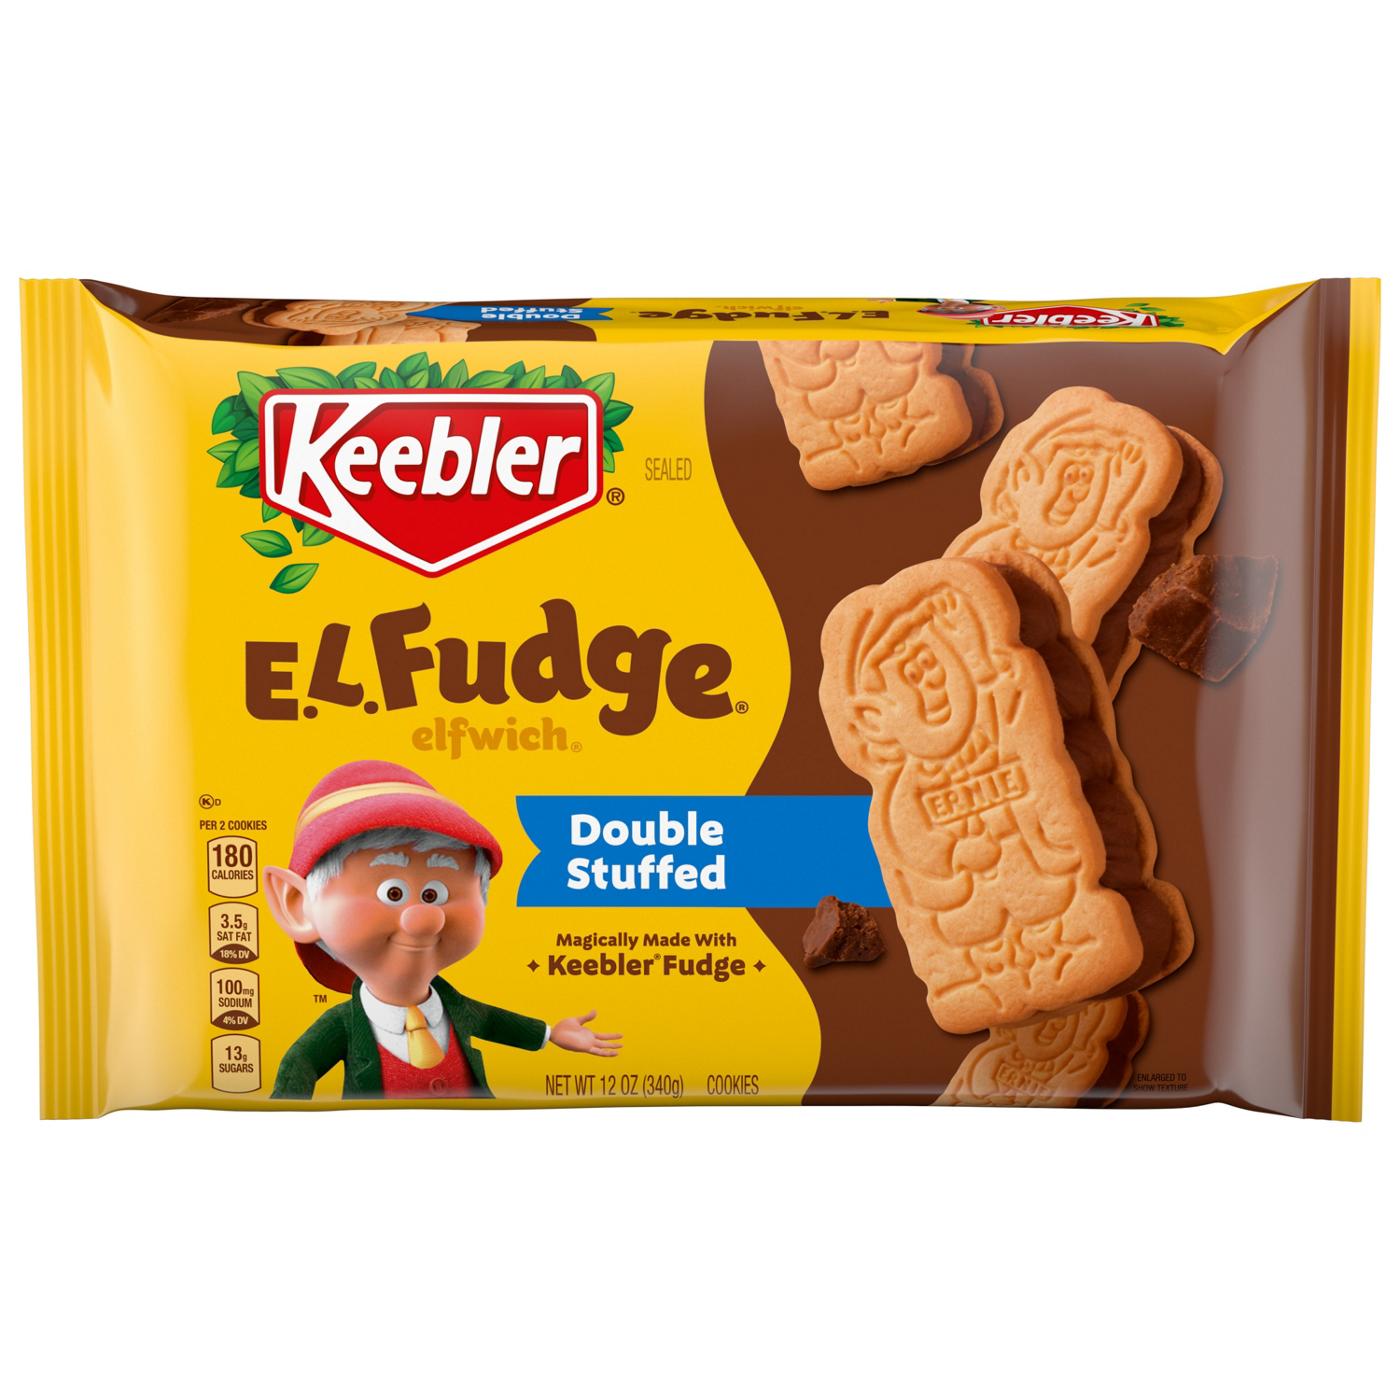 Keebler Double Stuffed E.L. Fudge Elfwich Cookies; image 1 of 5